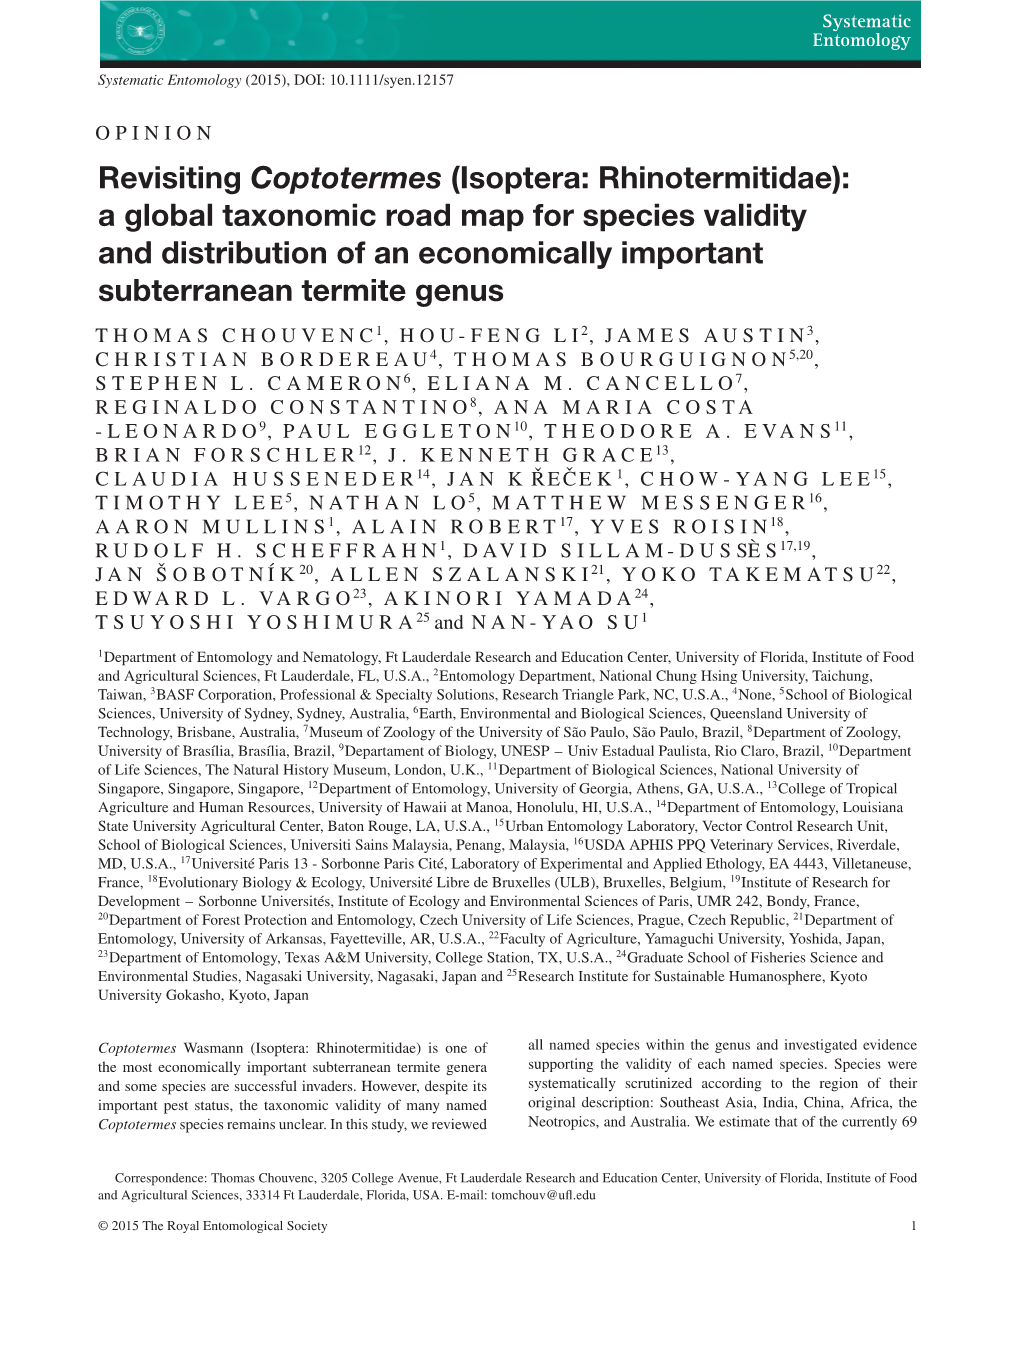 Revisiting Coptotermes (Isoptera: Rhinotermitidae): a Global